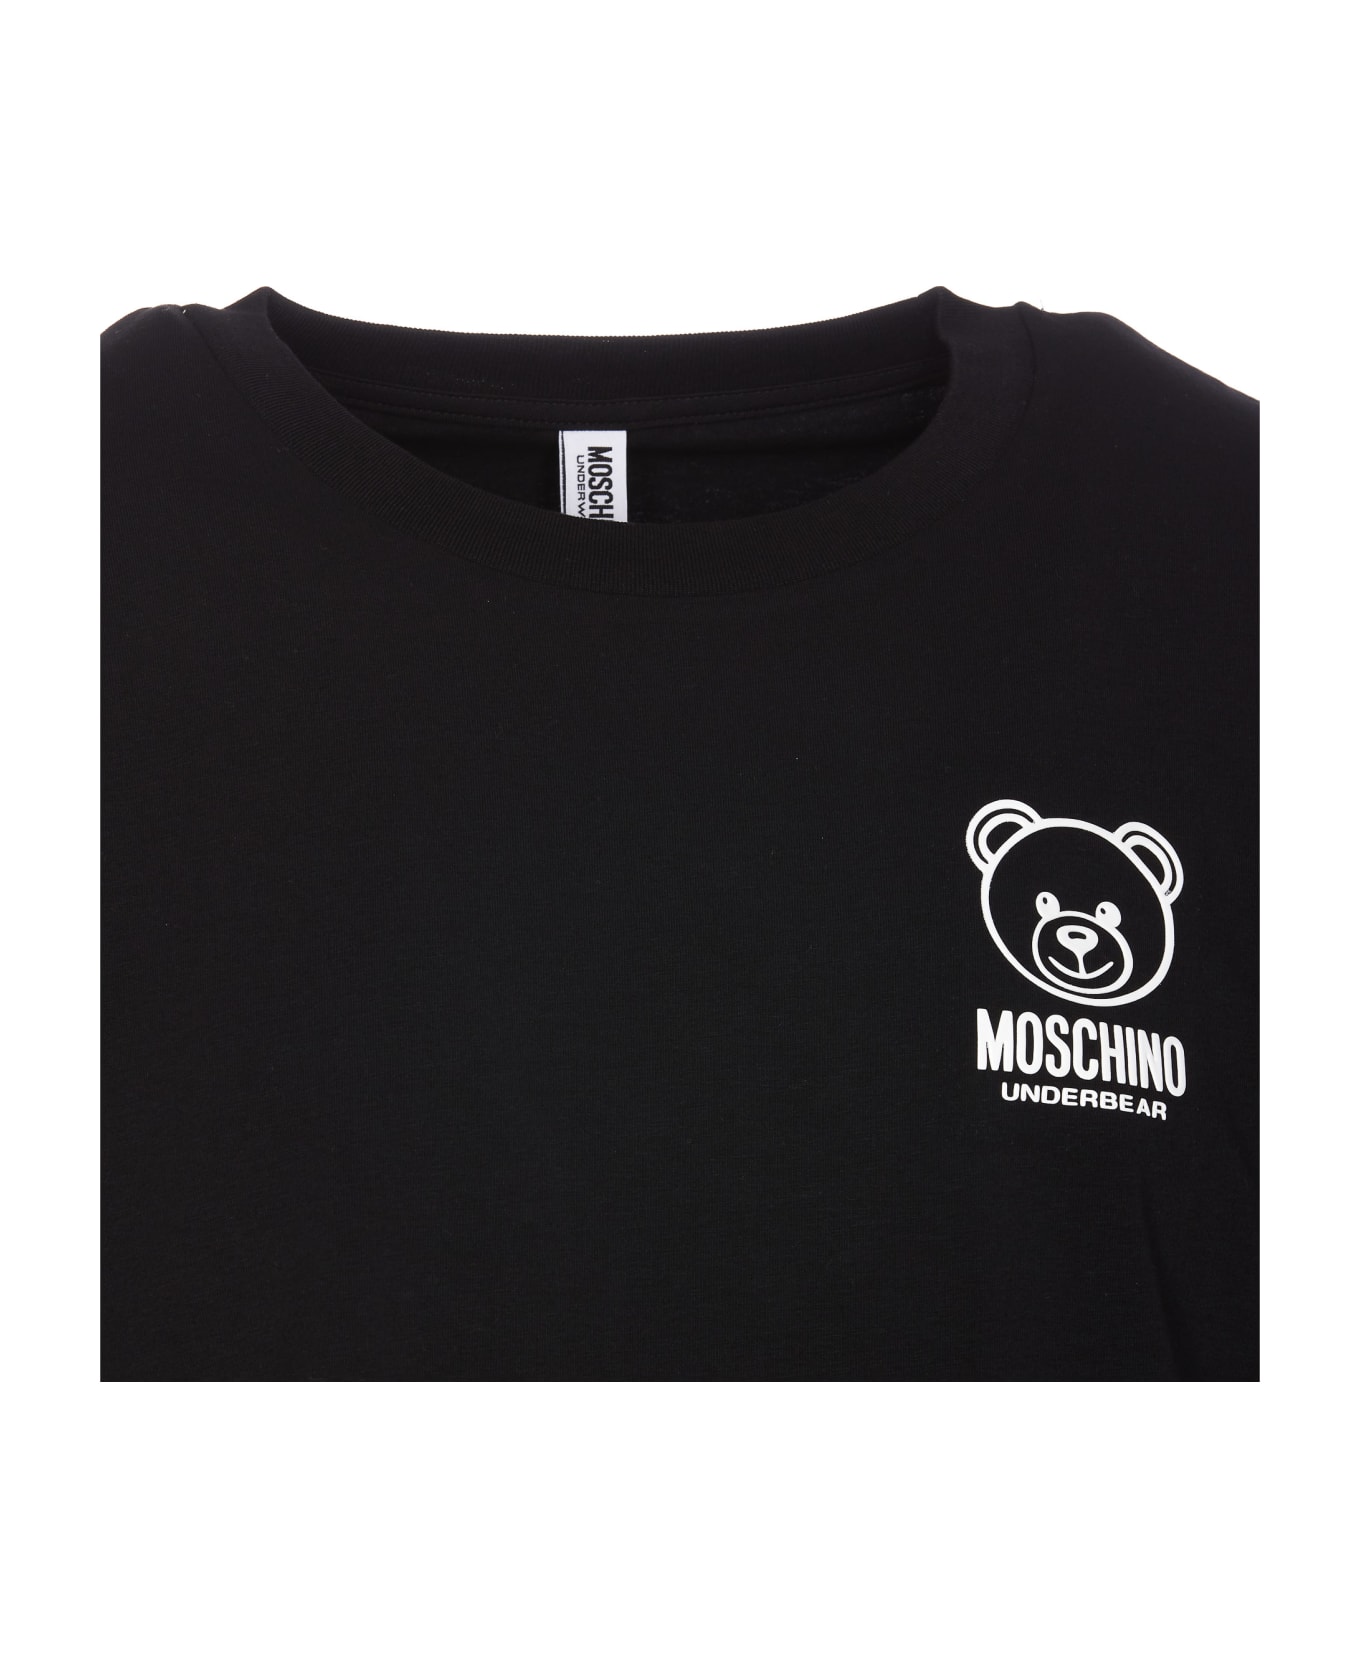 Moschino Underbear T-shirt - Black シャツ